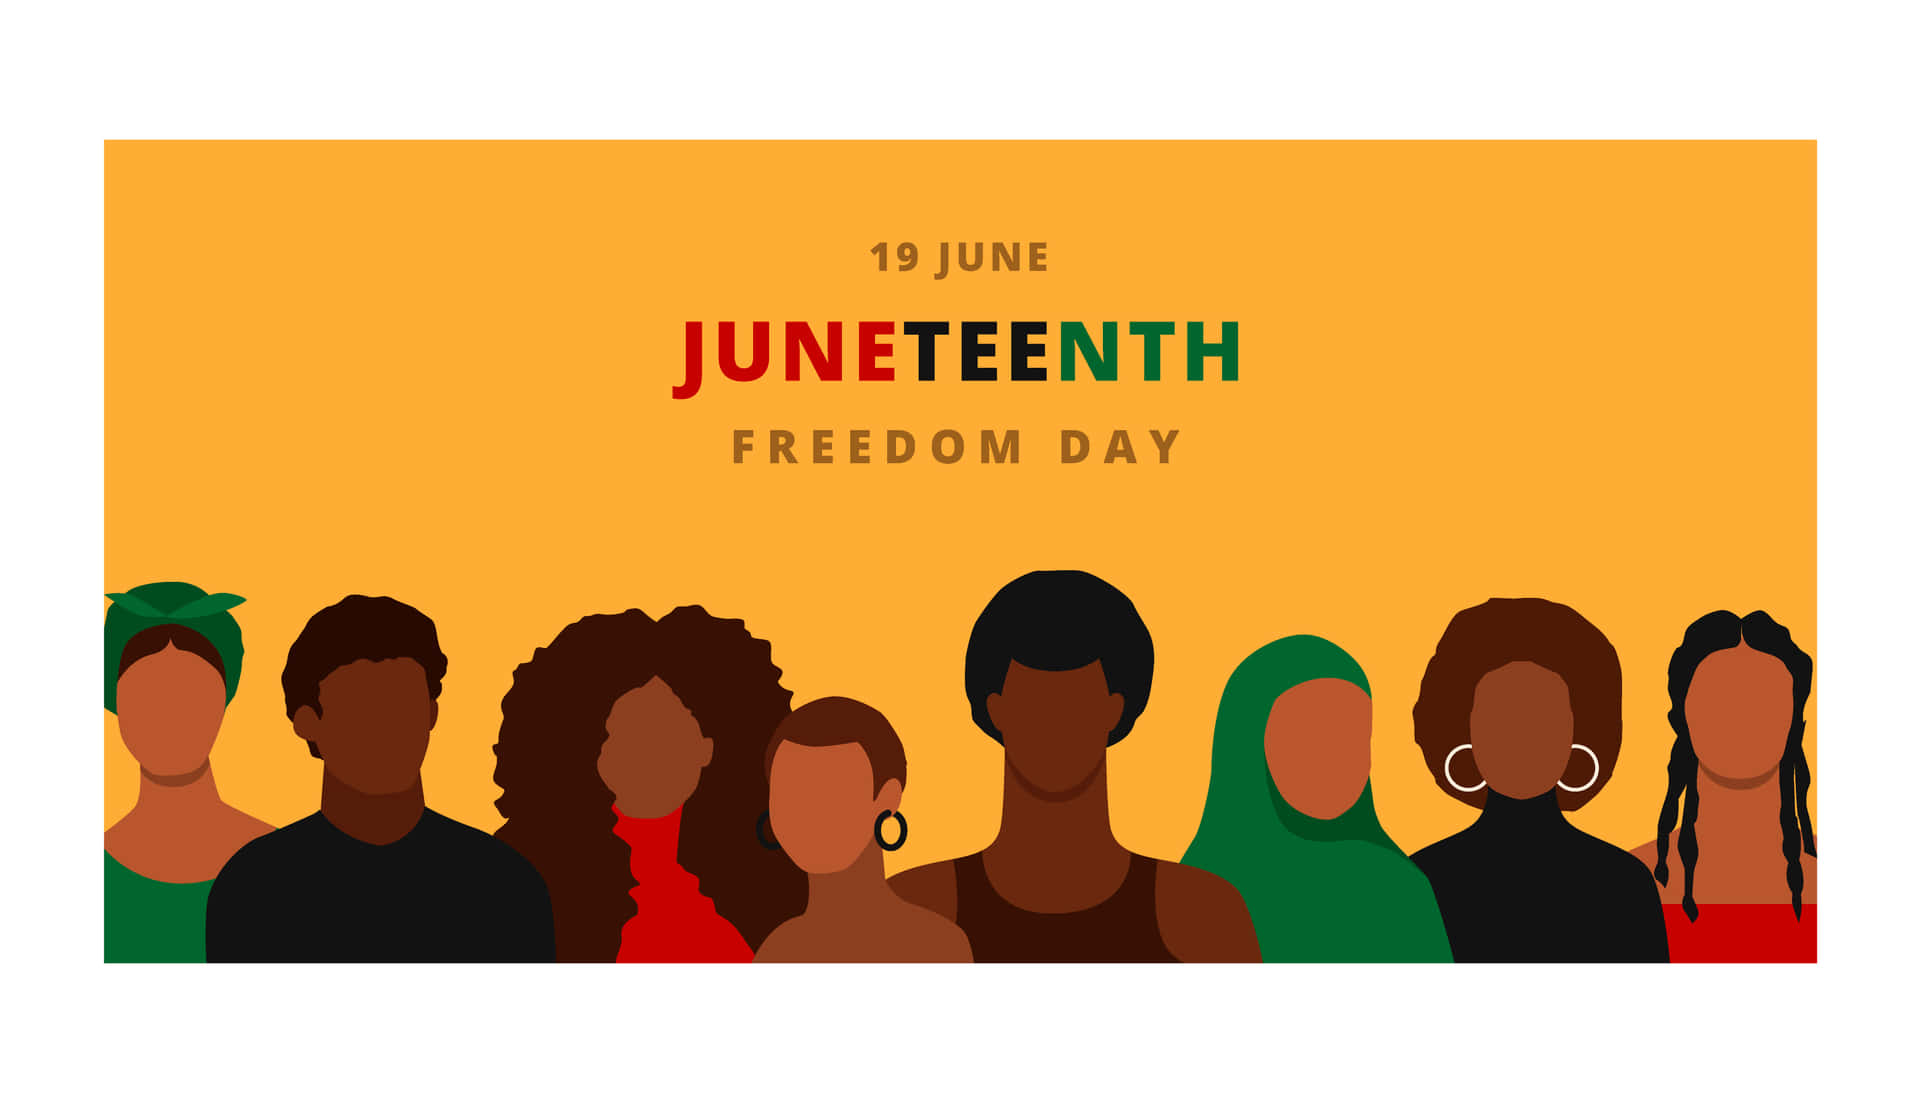 "Celebrating Juneteenth: Freedom and Unity"